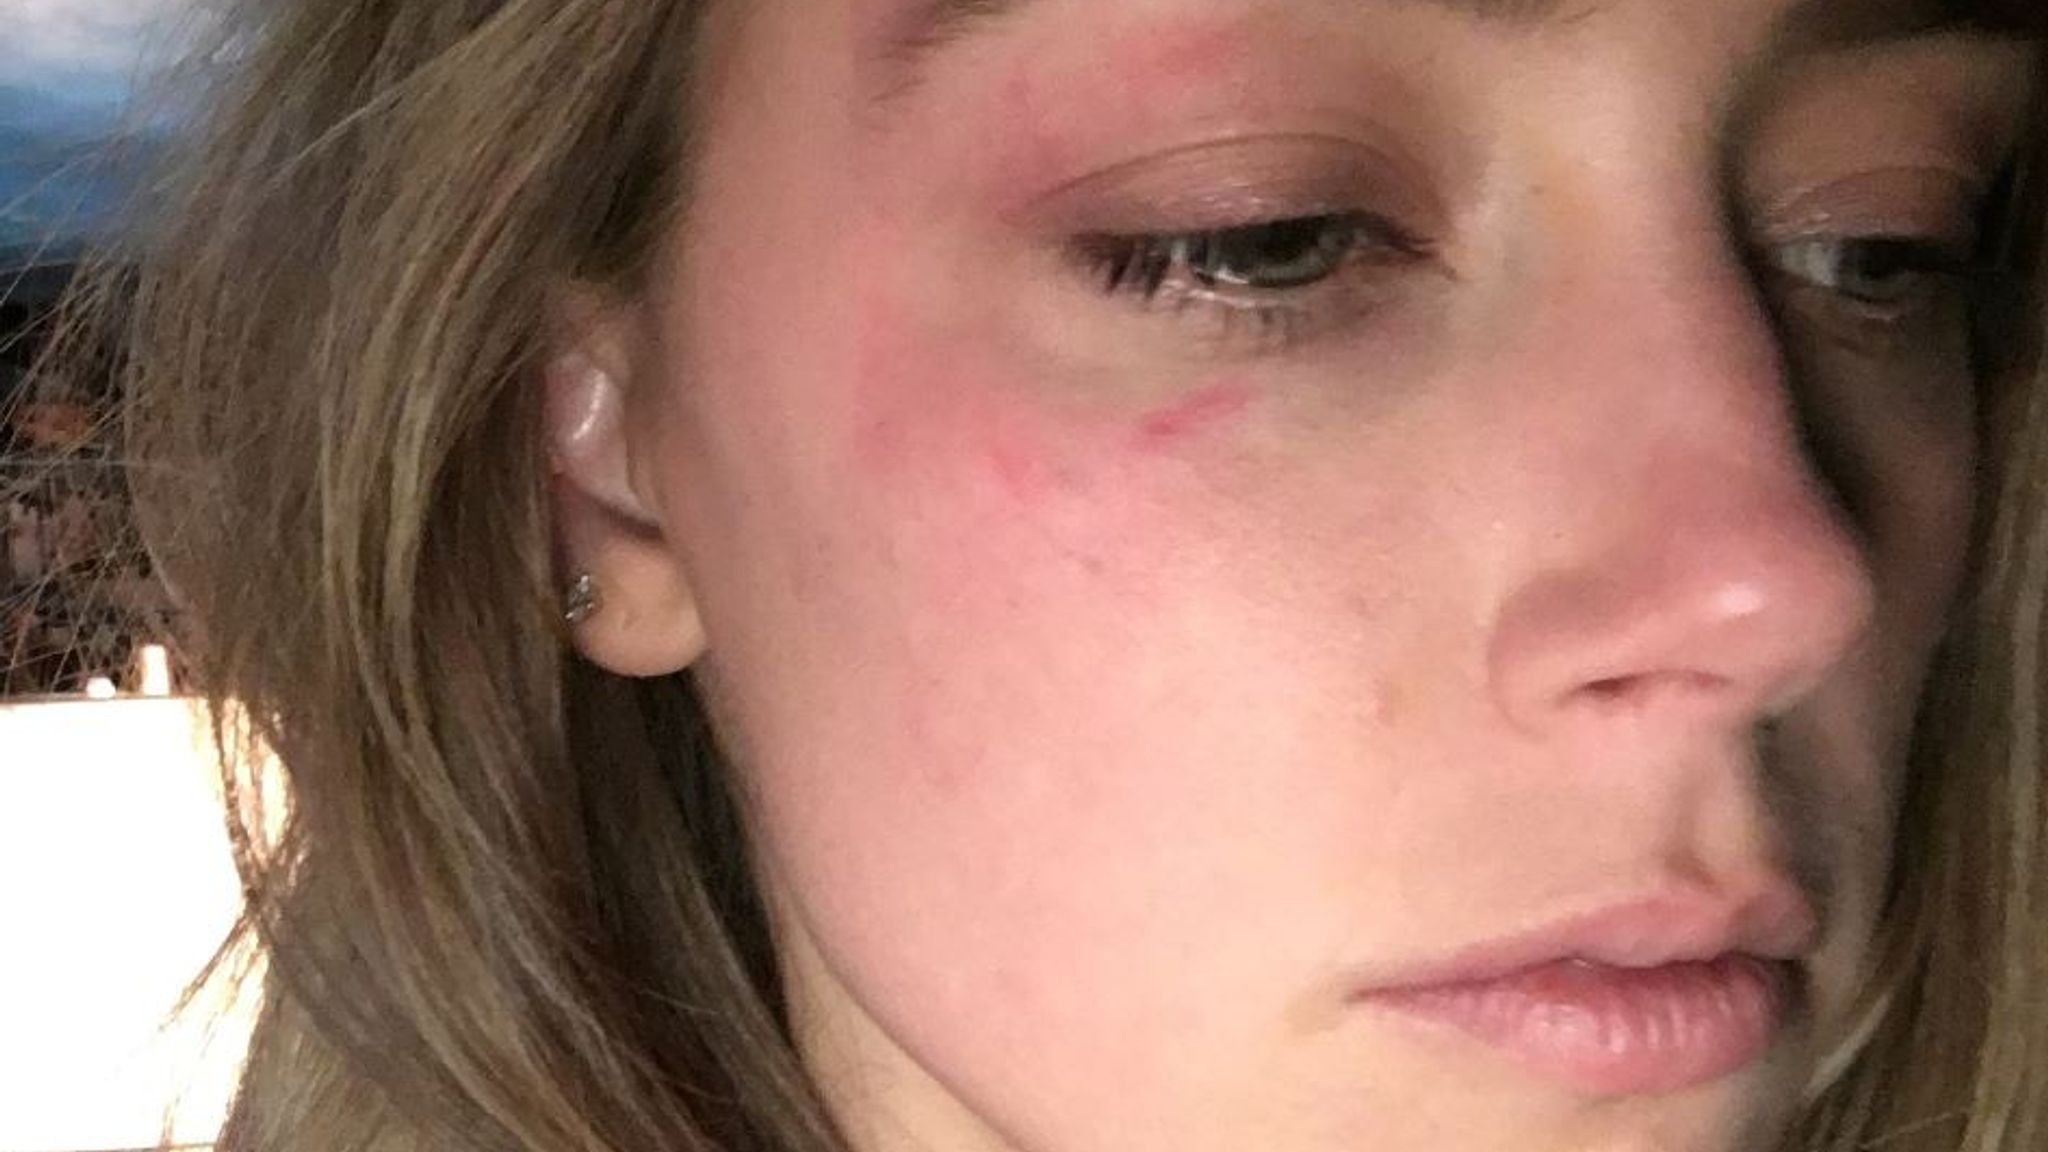 Amber Heard - Facial Injuries